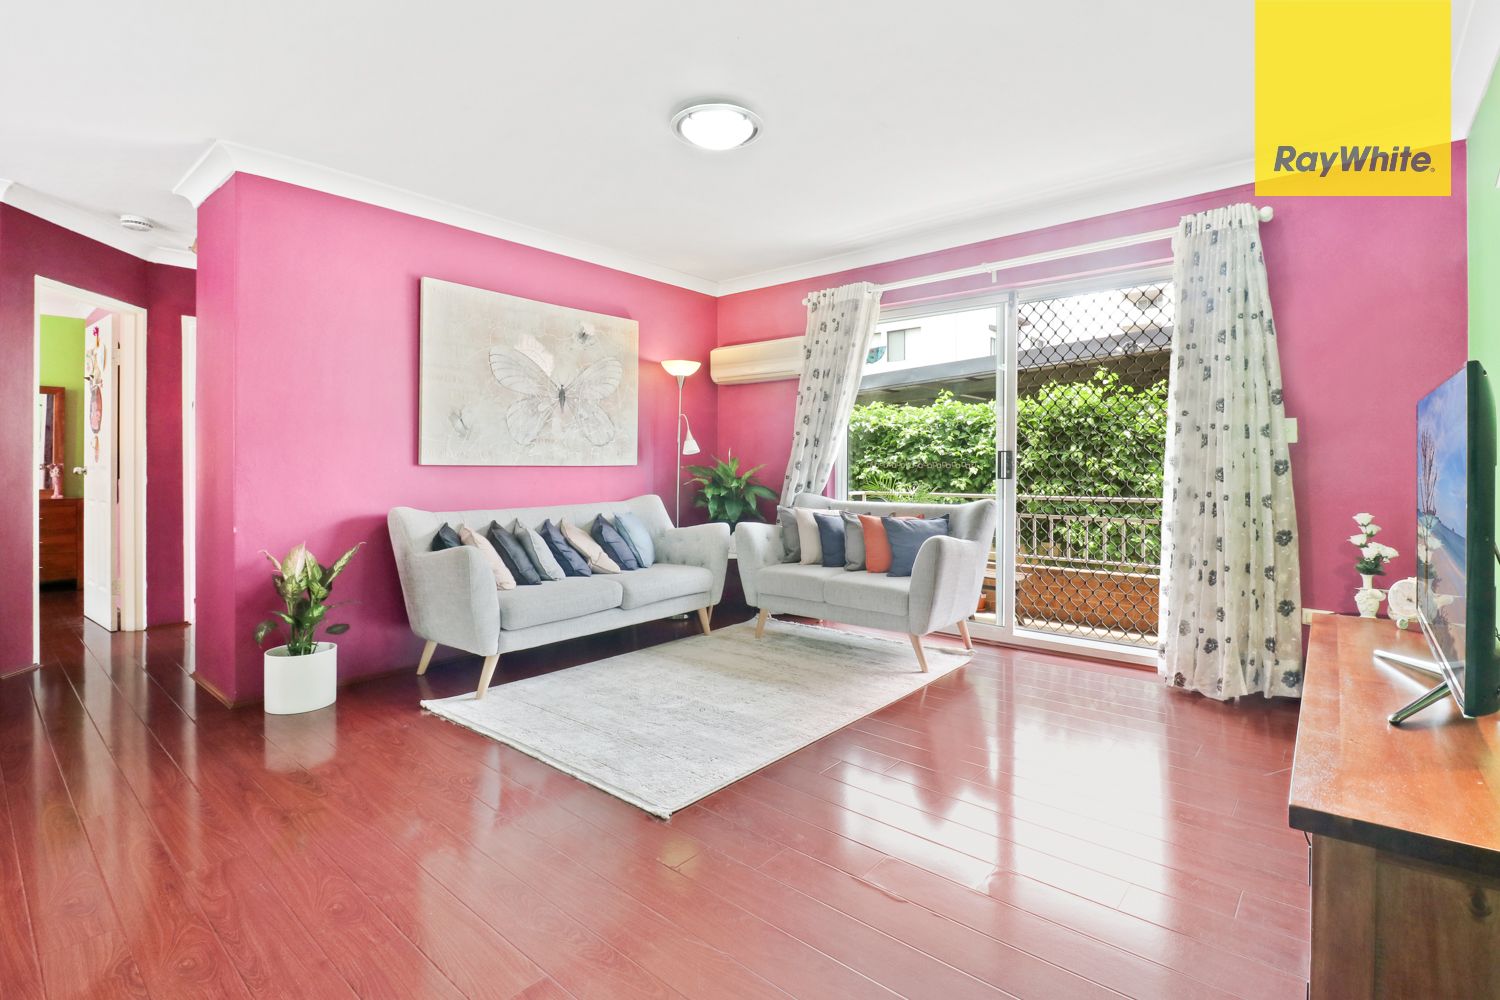 2 bedrooms Apartment / Unit / Flat in 2/132 Good Street HARRIS PARK NSW, 2150